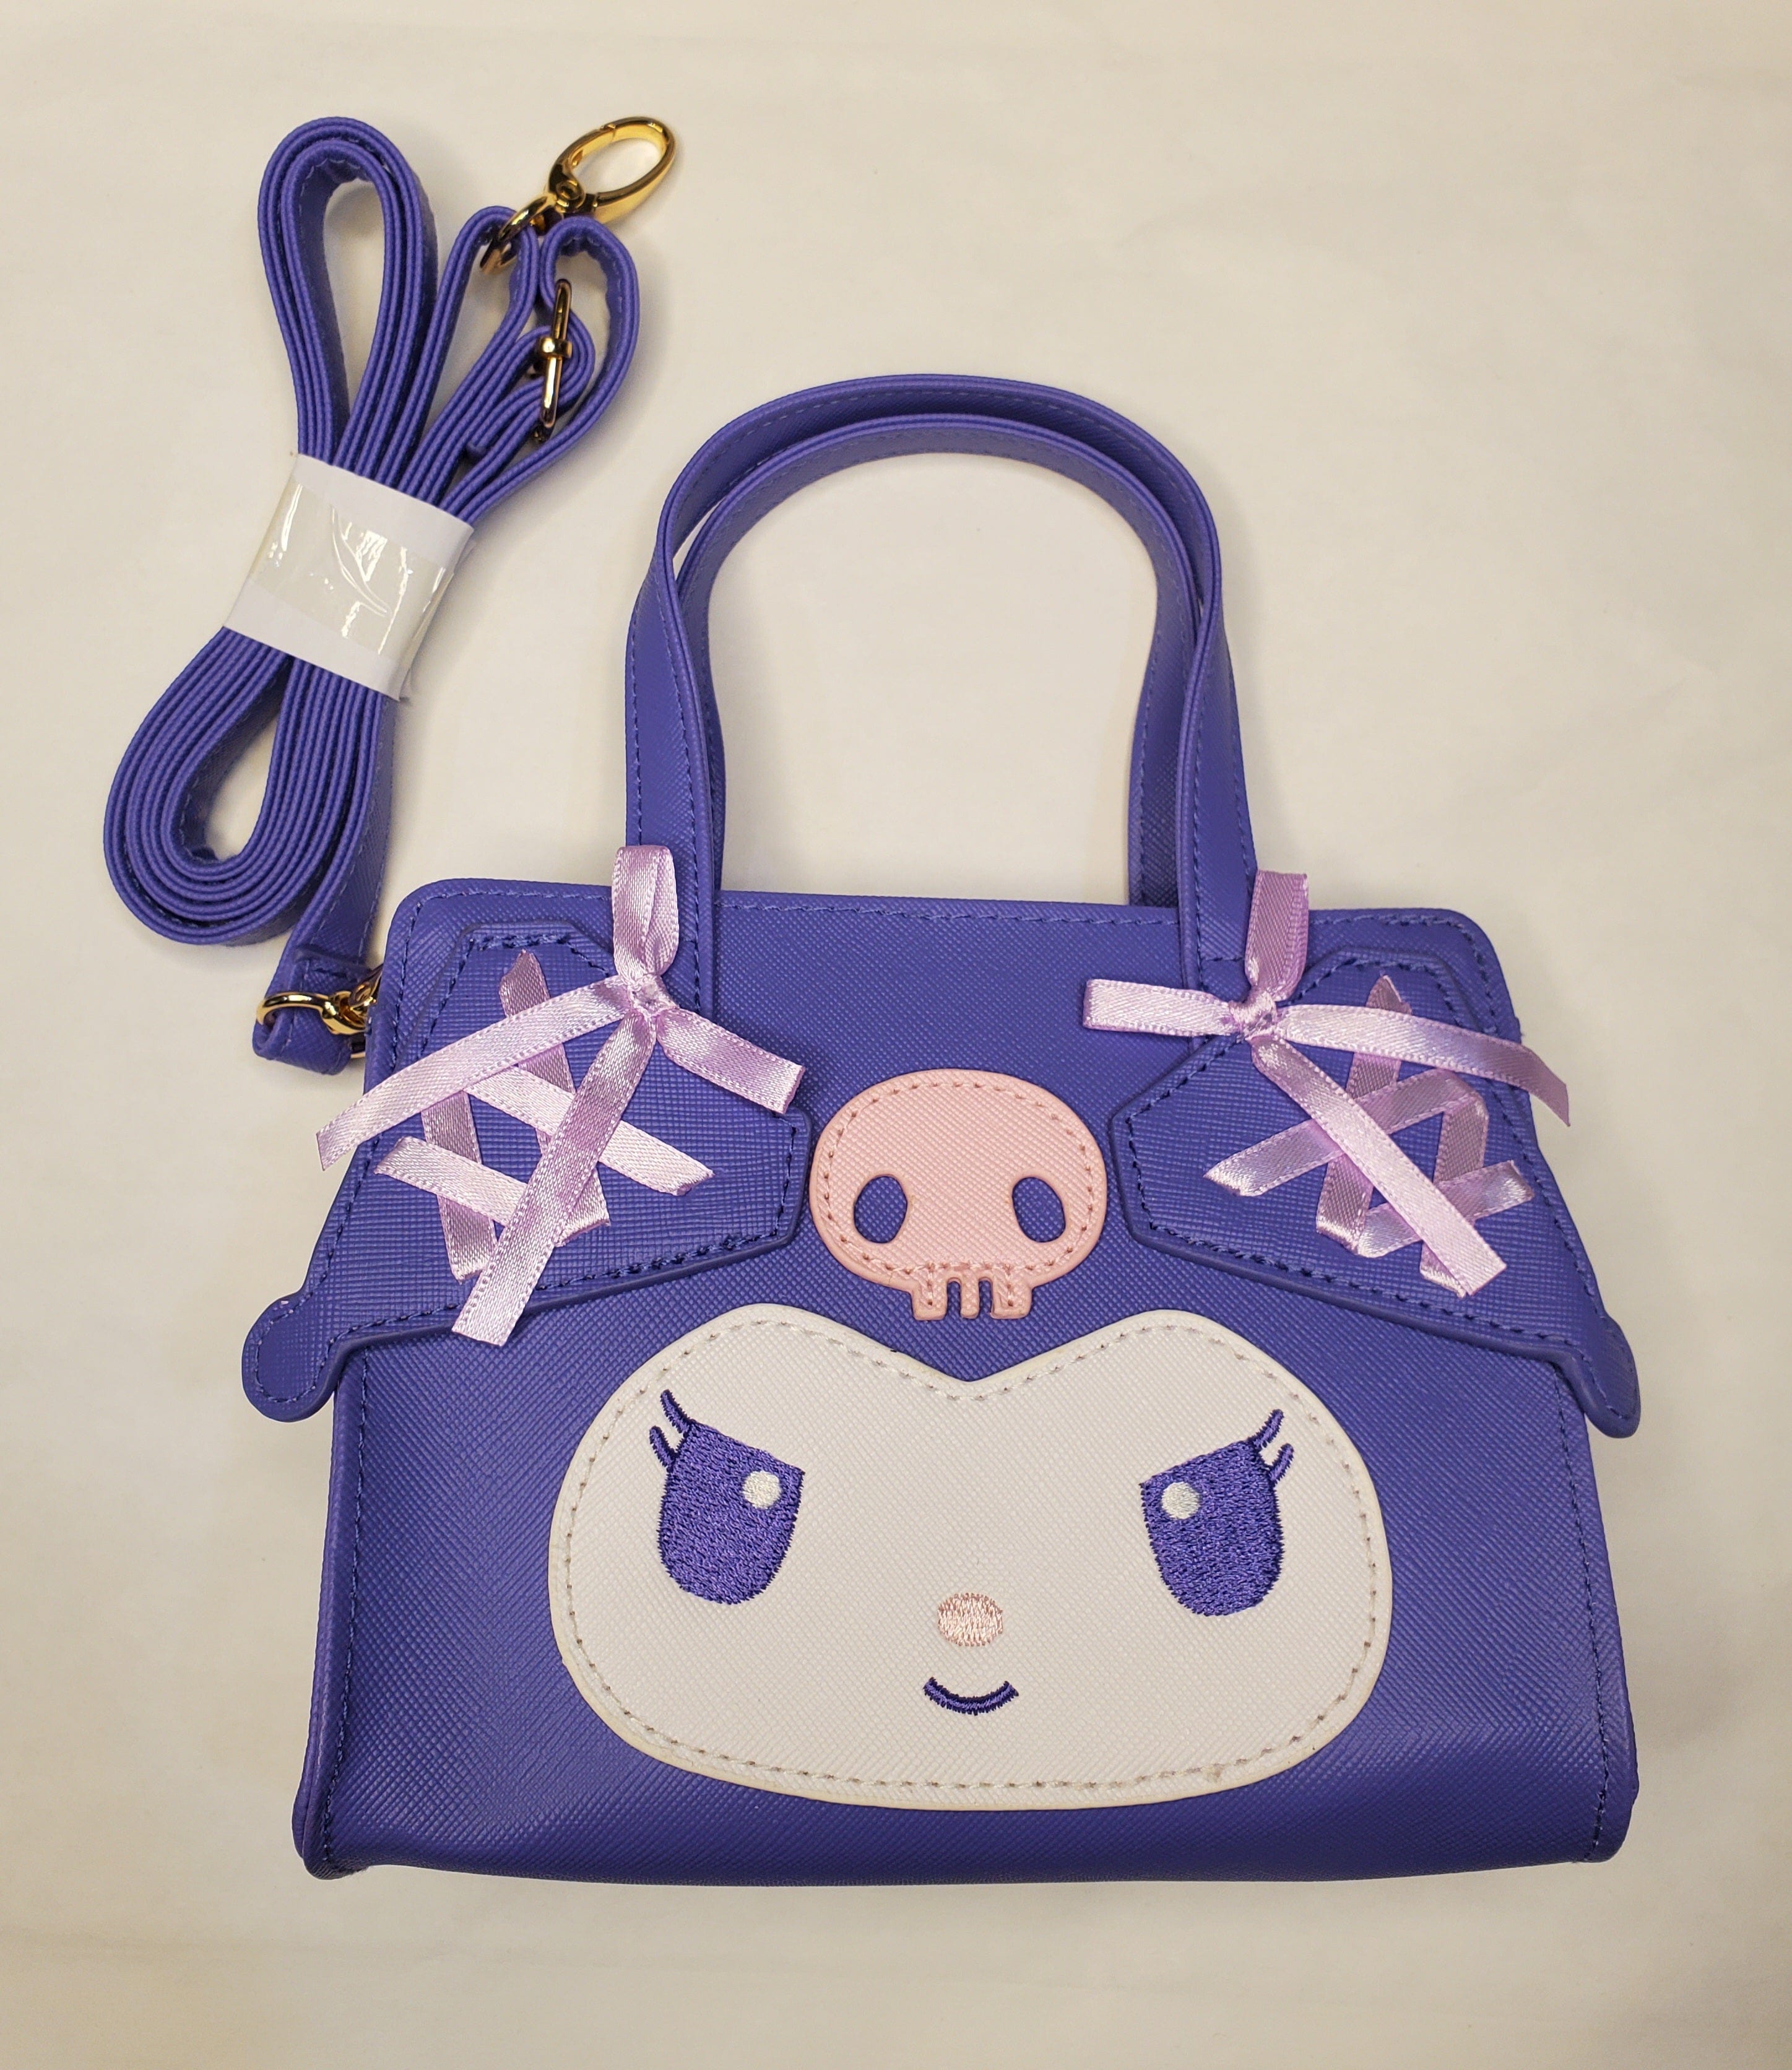 Enesco Sanrio Original Kuromi Handbags with Shoulder Straps Purple Kawaii Gifts 4901610892473